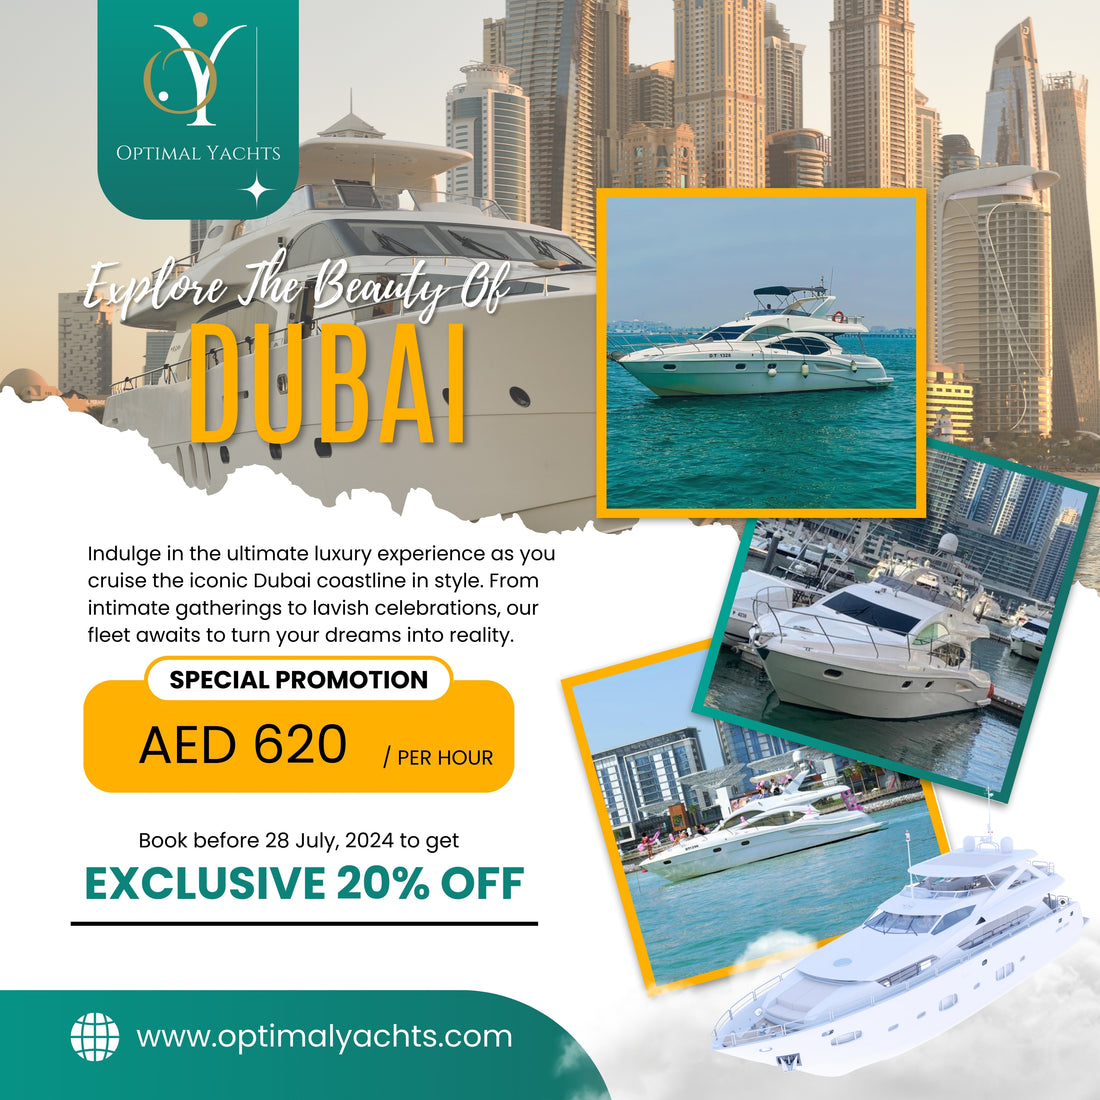 Optimal Yachts Dubai, luxury Yacht Cruise rental and offers.